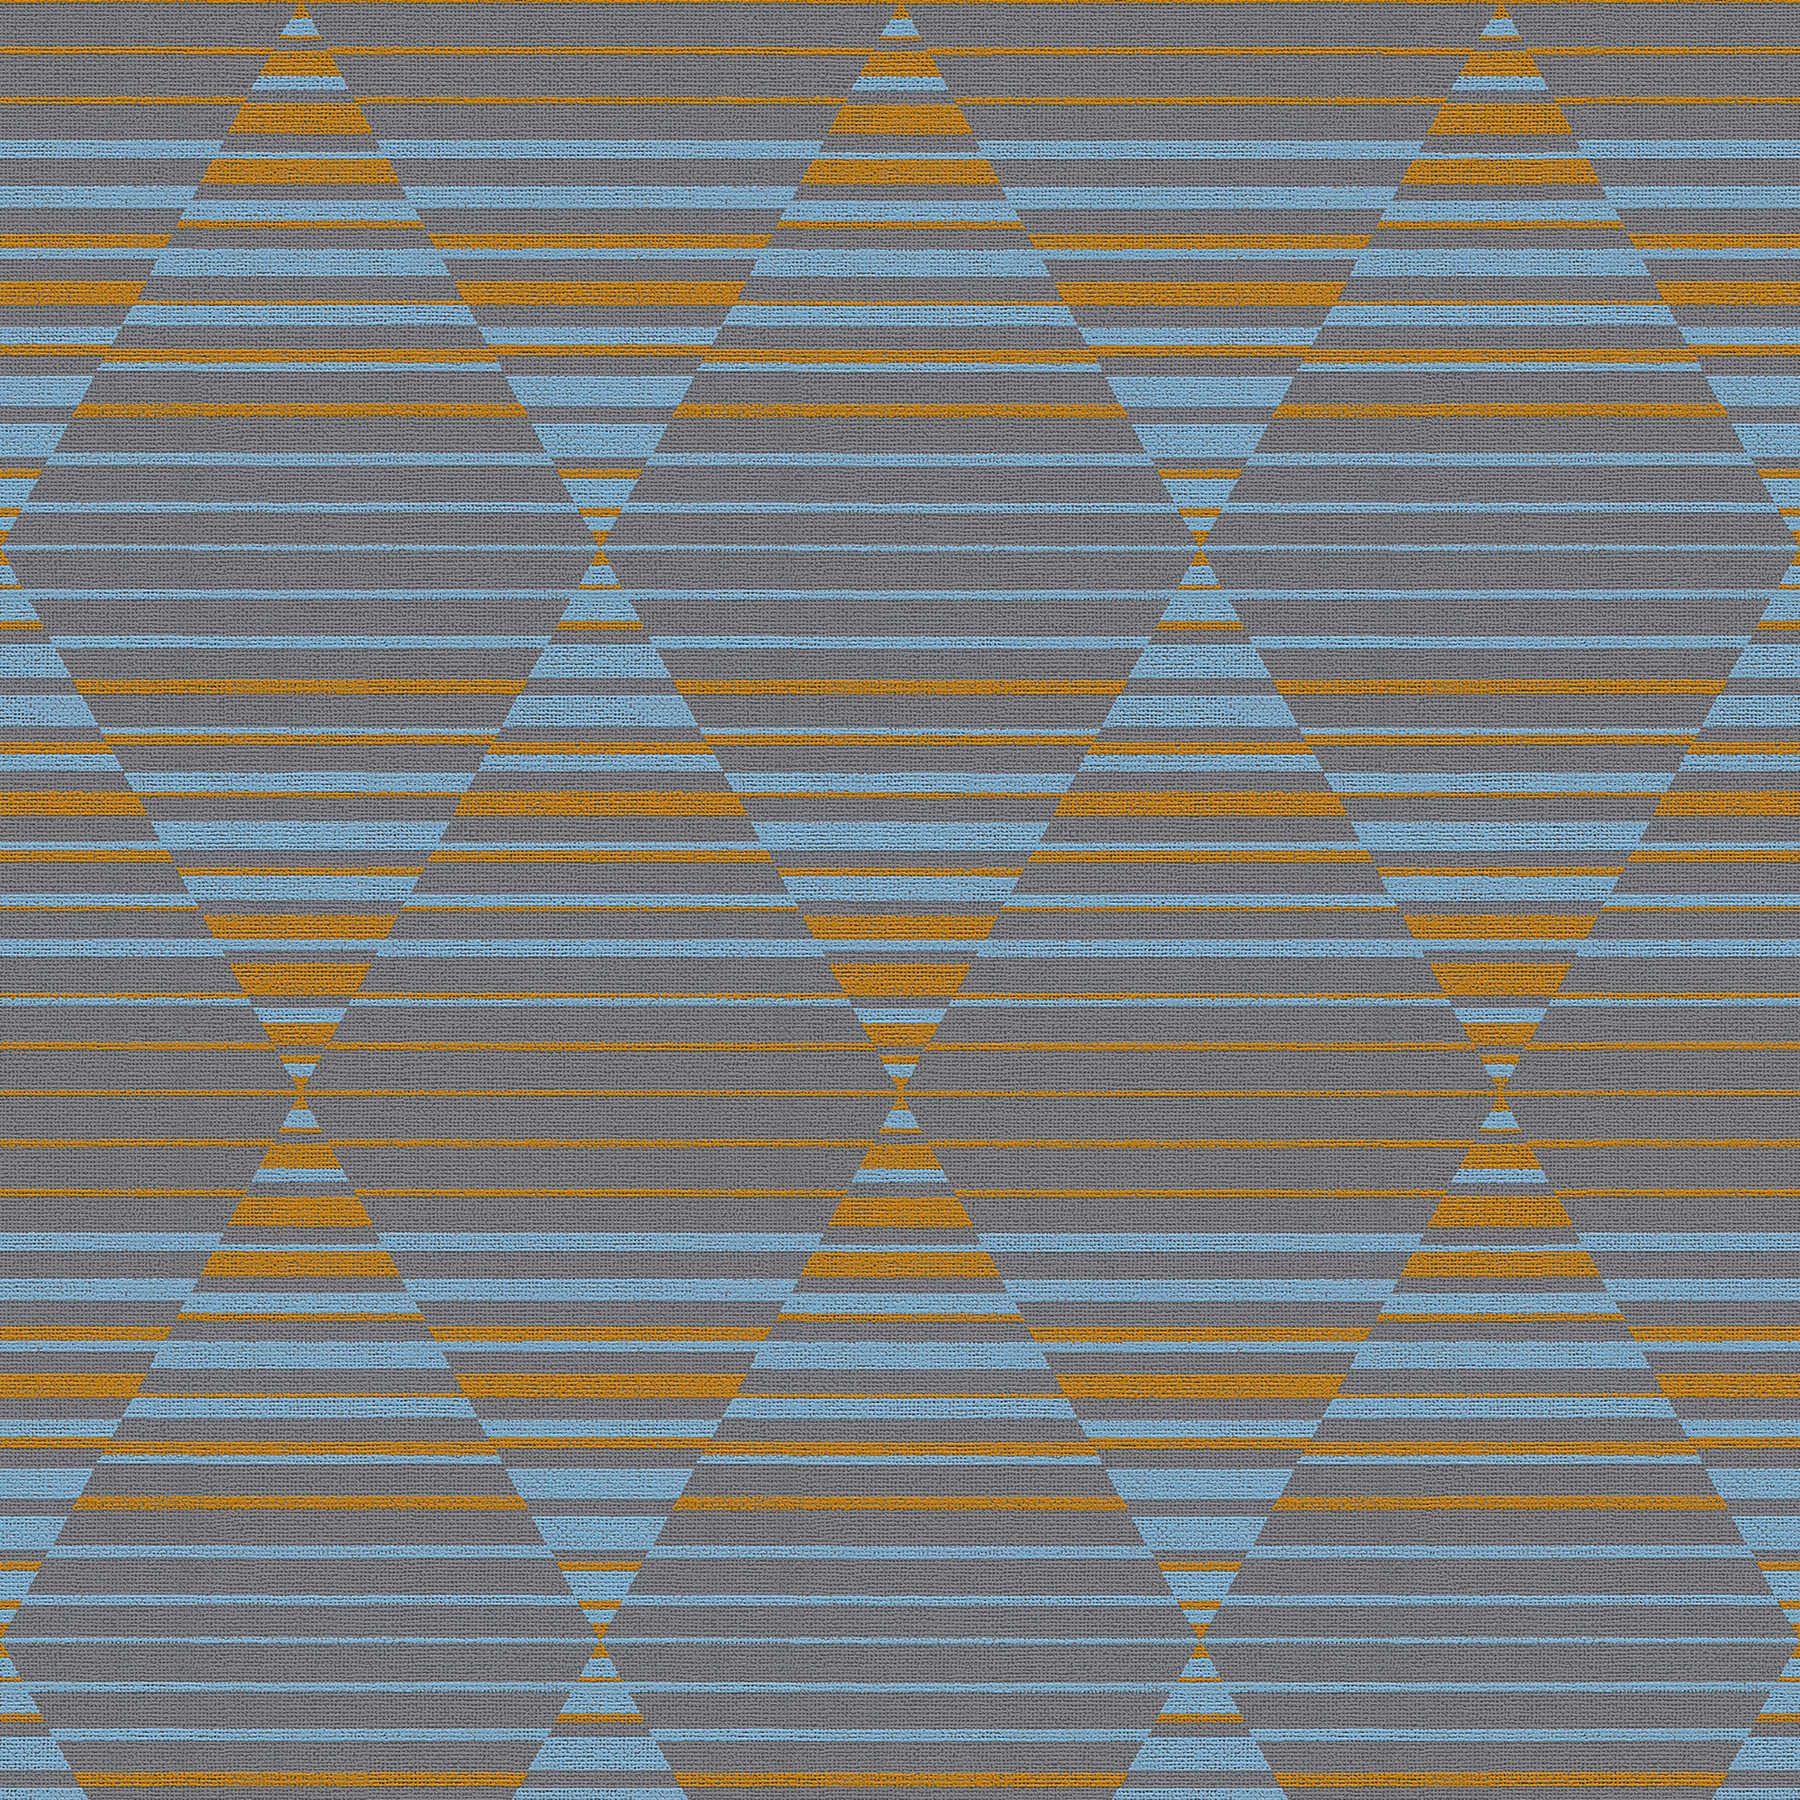         Retro Tapete 70er Muster Streifen & Rauten – Grau, Blau, Orange
    